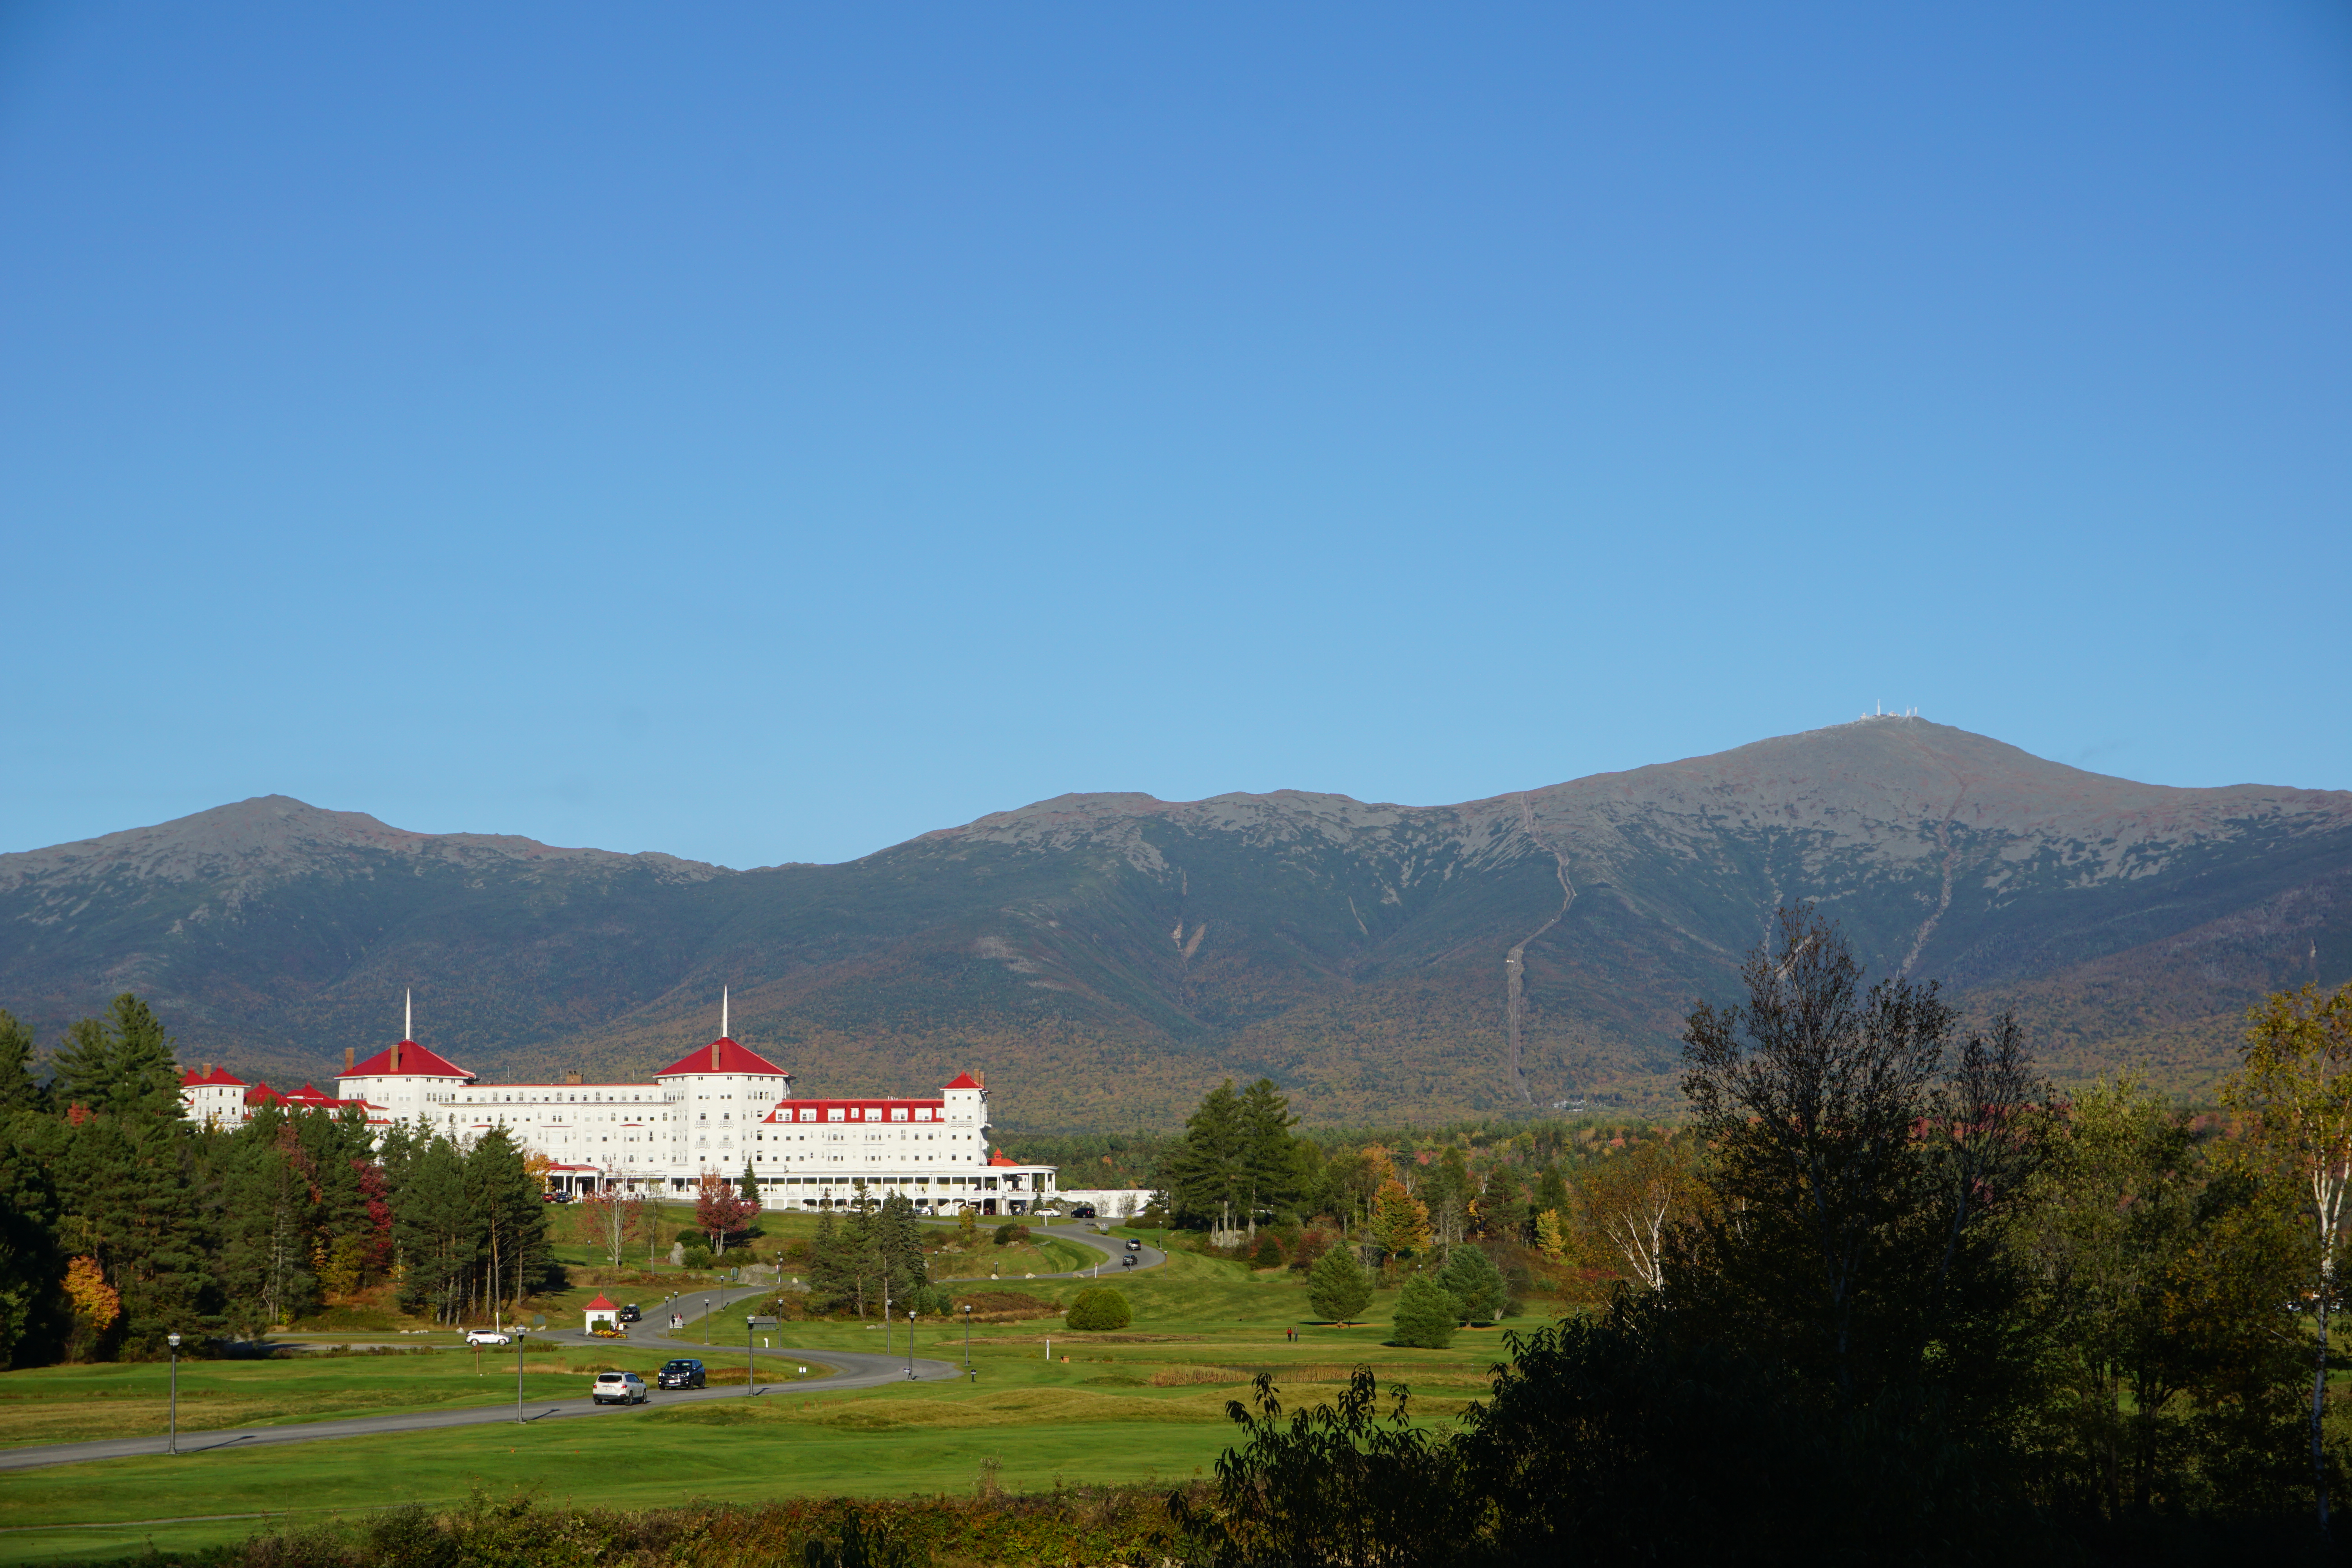 Omni Resort and Mount Washington